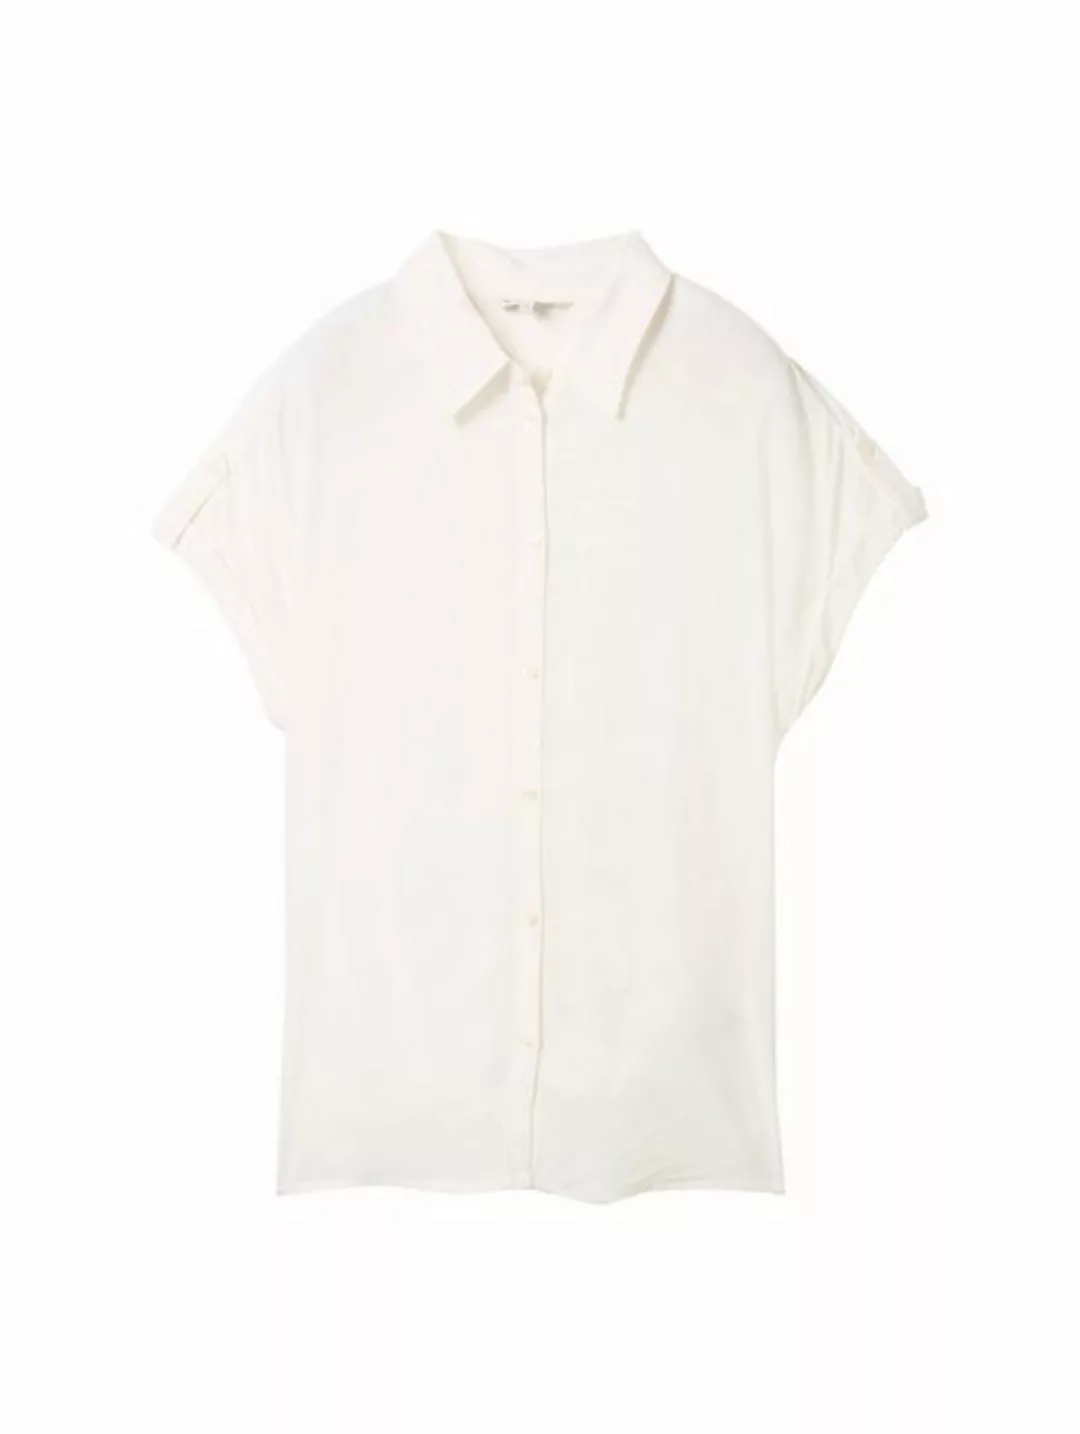 TOM TAILOR Blusenshirt shortsleeve blouse shirt günstig online kaufen